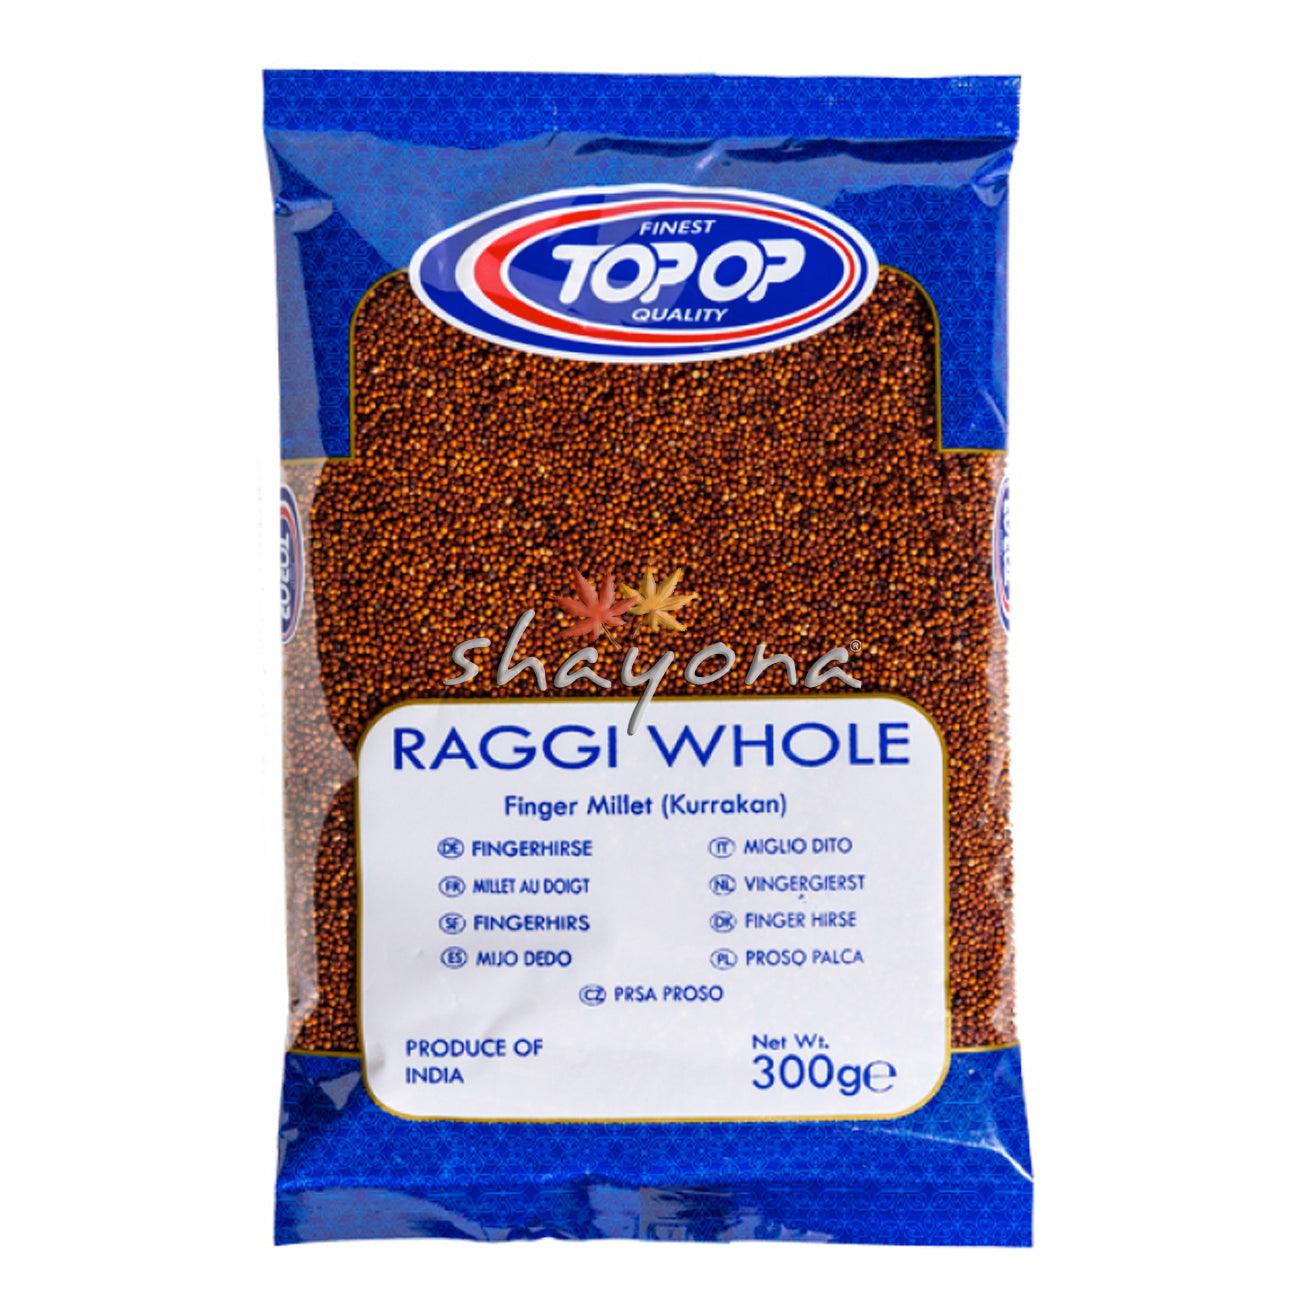 TopOp Raggi Whole - Shayona UK